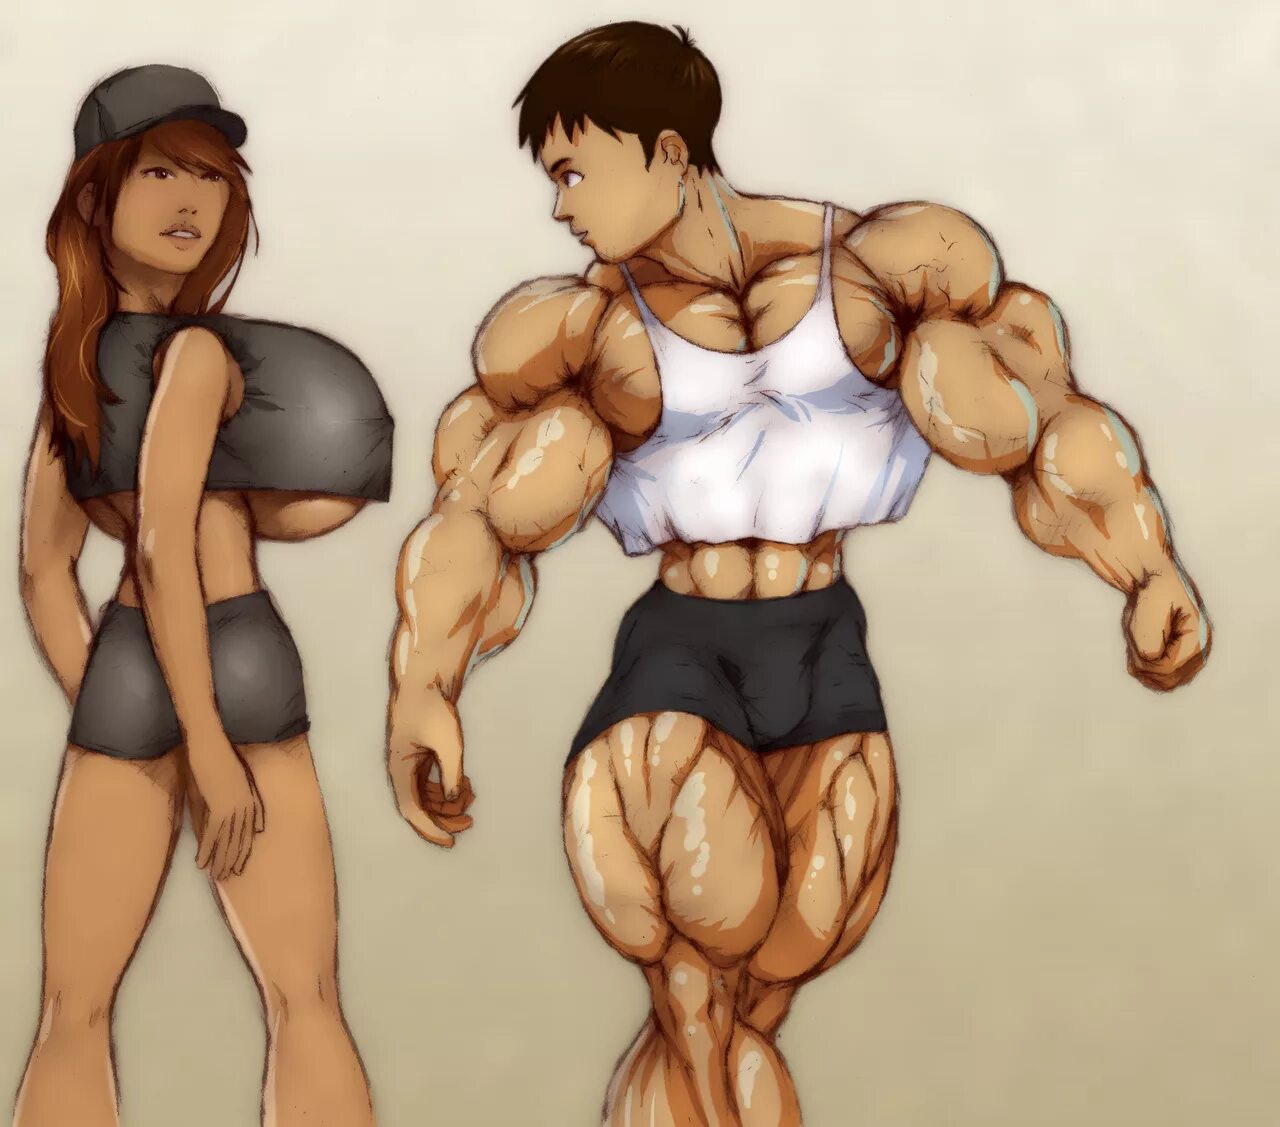 Female dick. FMG muscle growth Transformations мальчиков. Девочка с гигантскими мускулами.